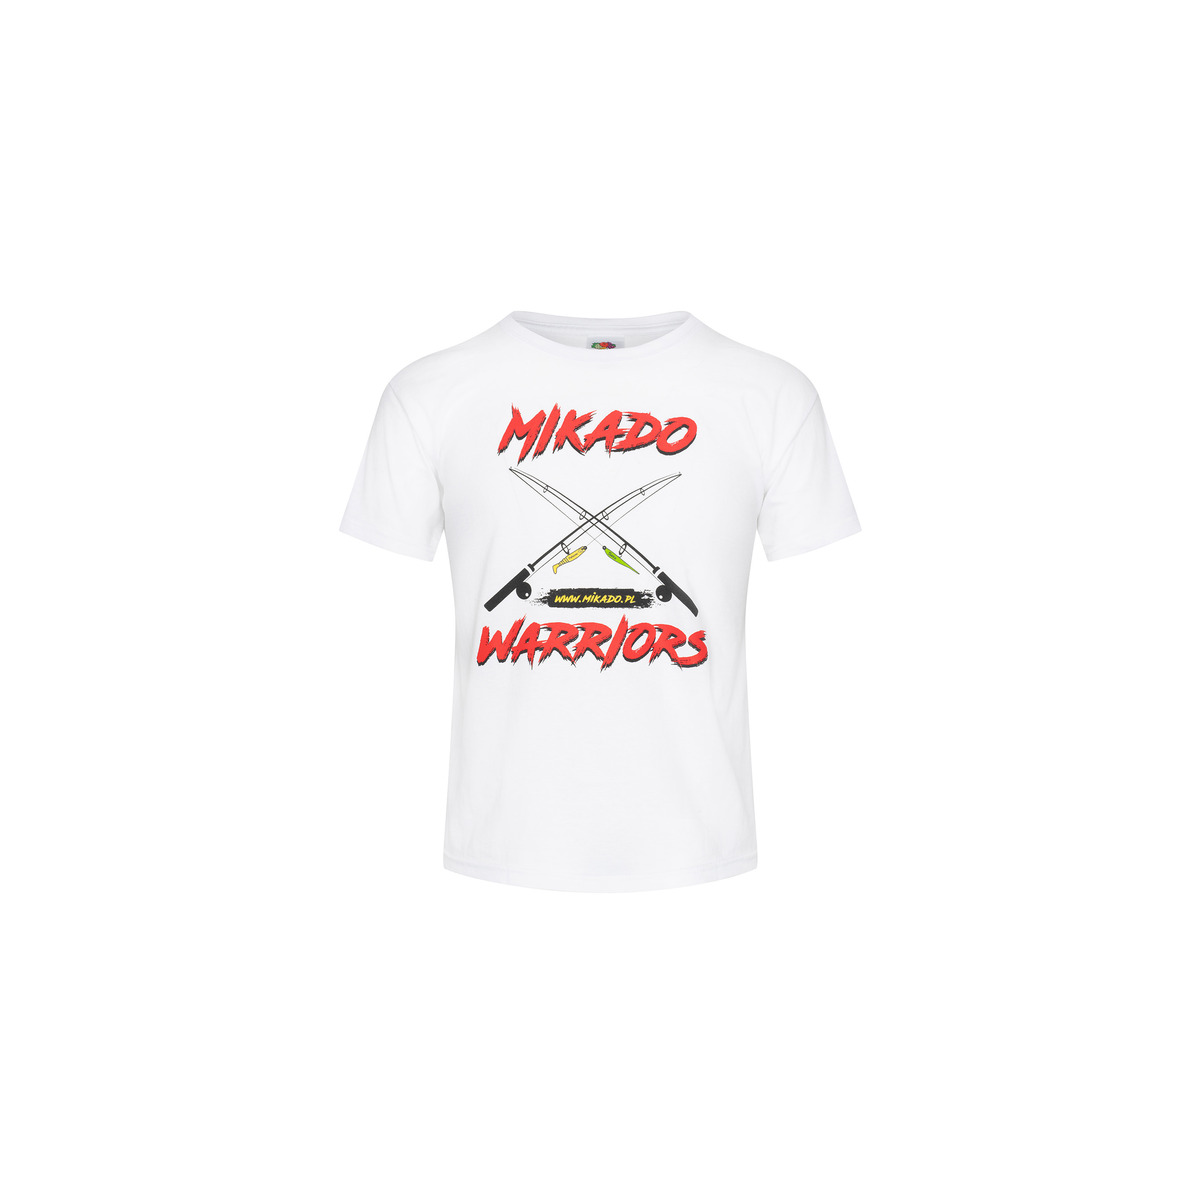 Mikado Tshirt With Overprint - KIDS WARRIORS  size 152  WHITE